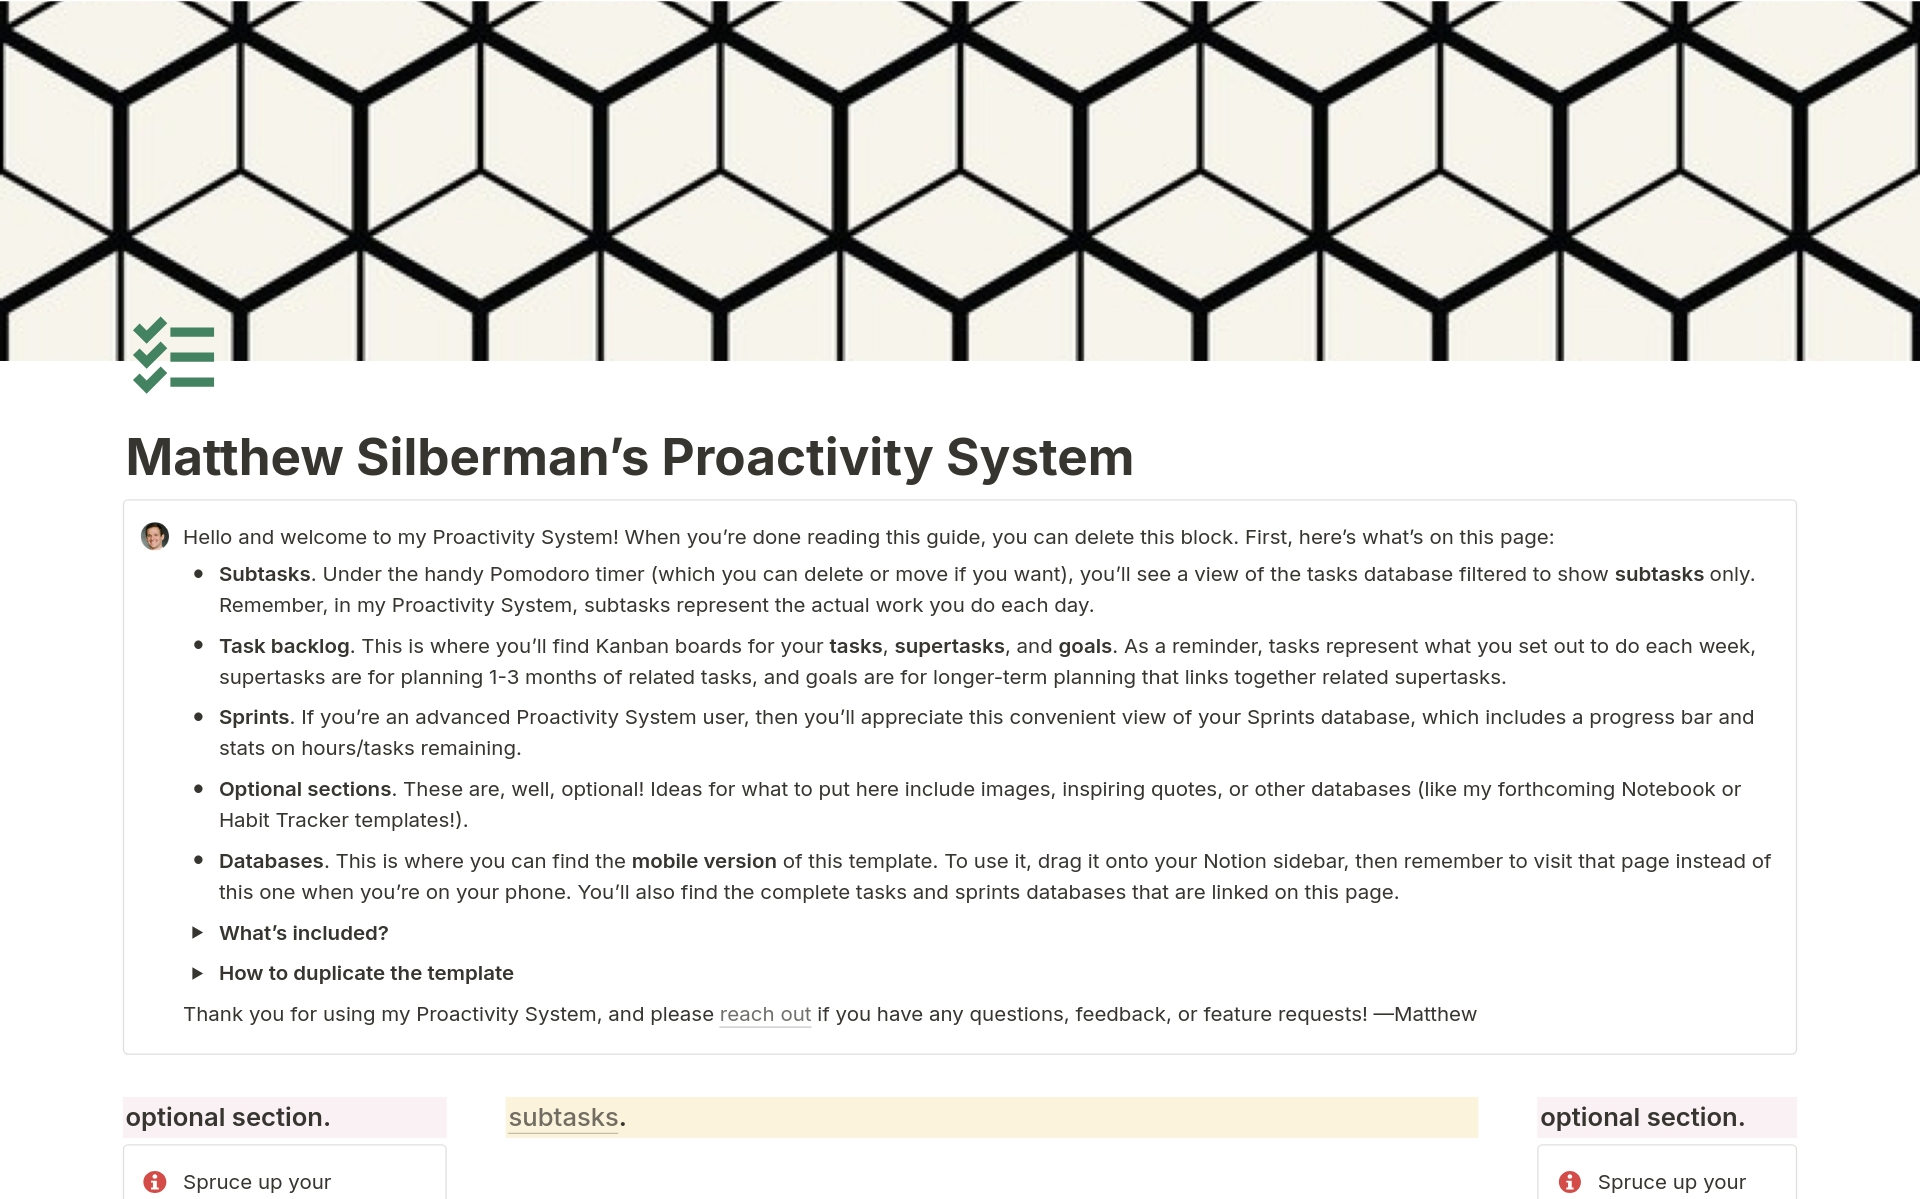 Aperçu du modèle de Matthew Silberman's Proactivity System